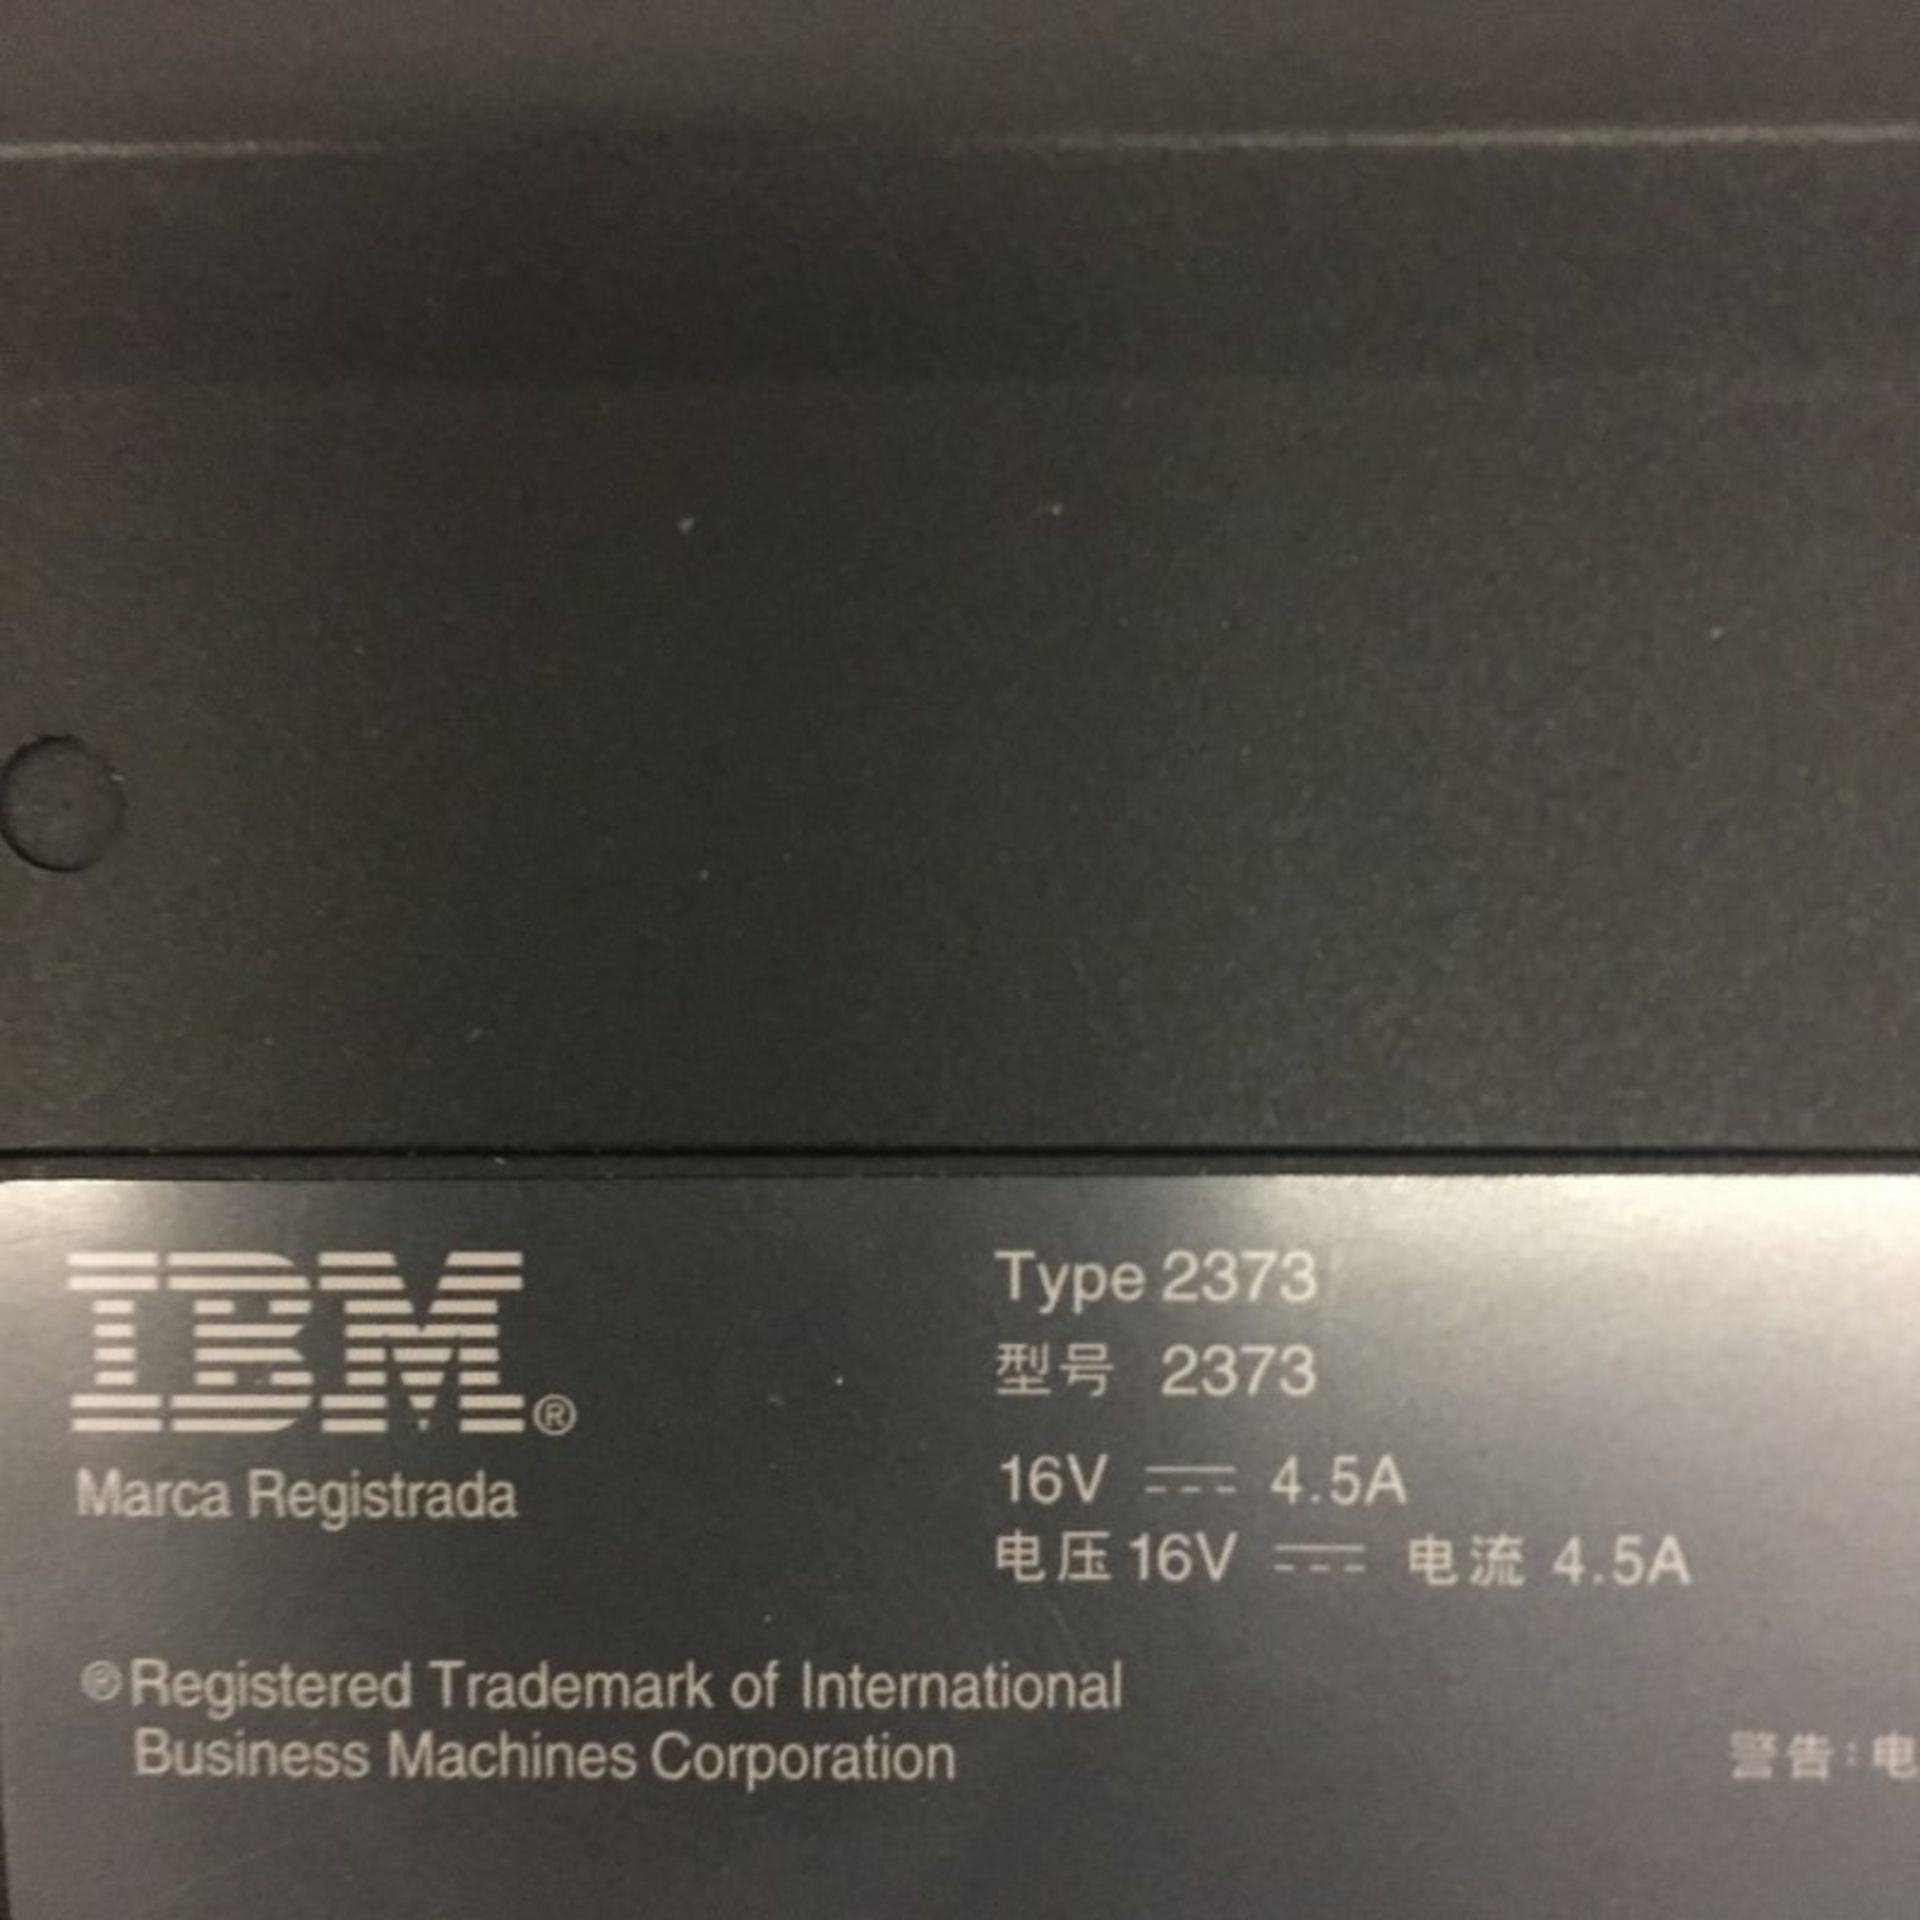 IBM Thinkpad Type 2373 with Leather Bag - Image 2 of 3